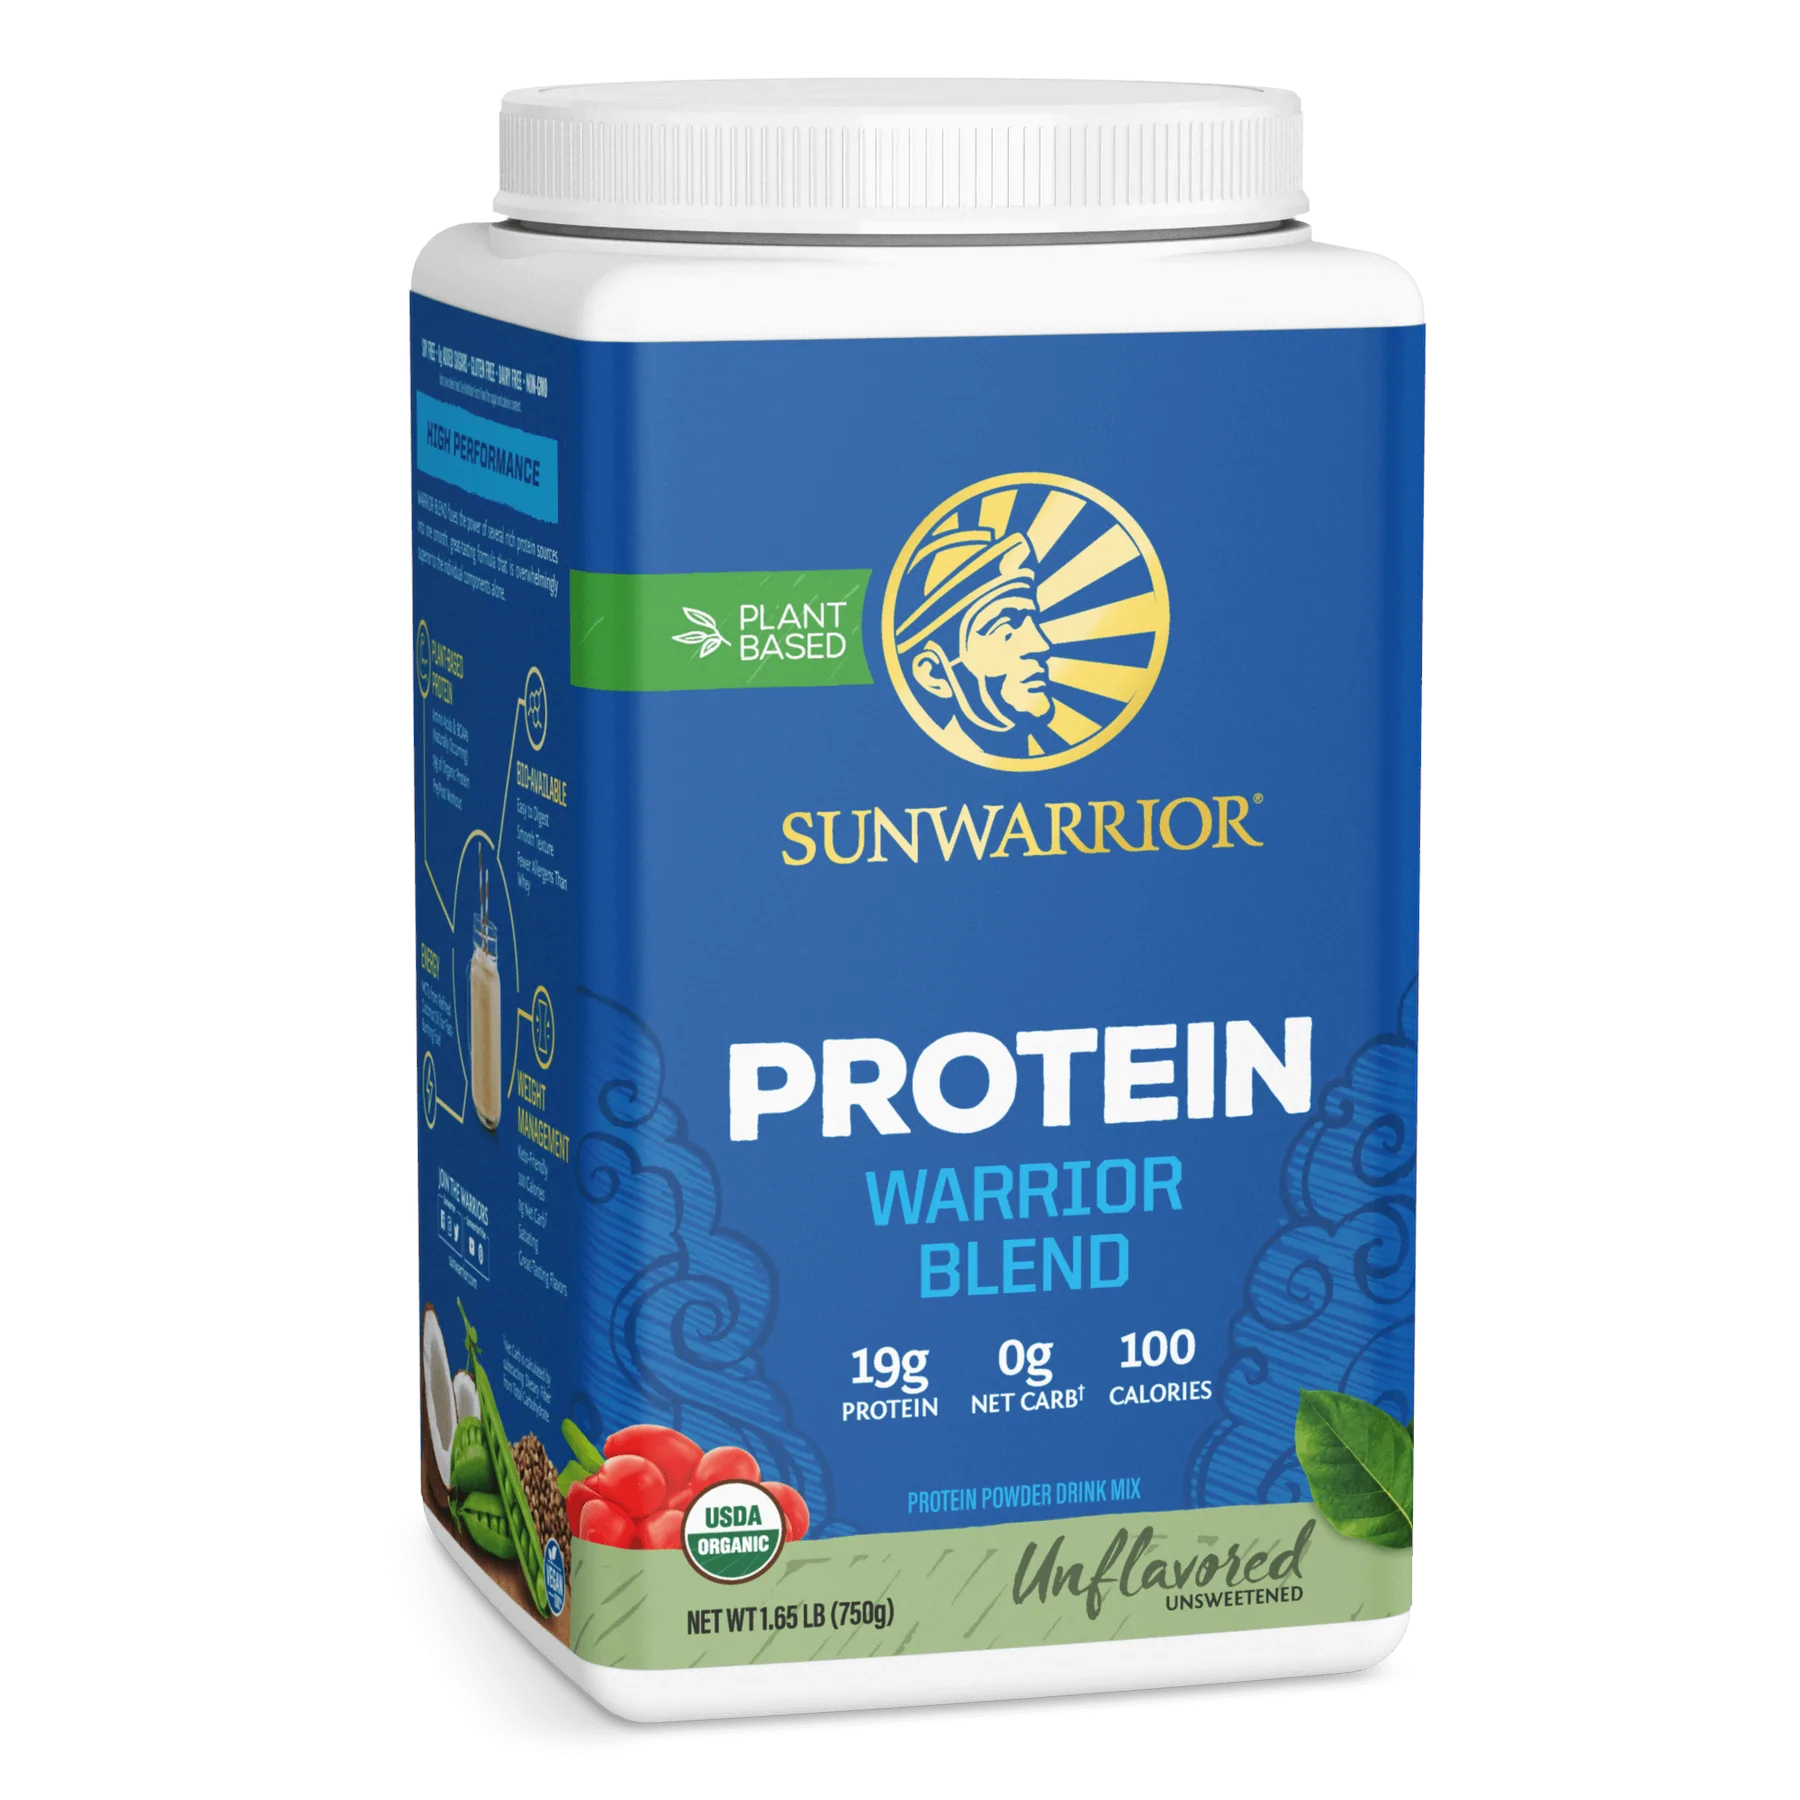 Protein thực vật Sunwarrior Warrior Blend - Không Vị